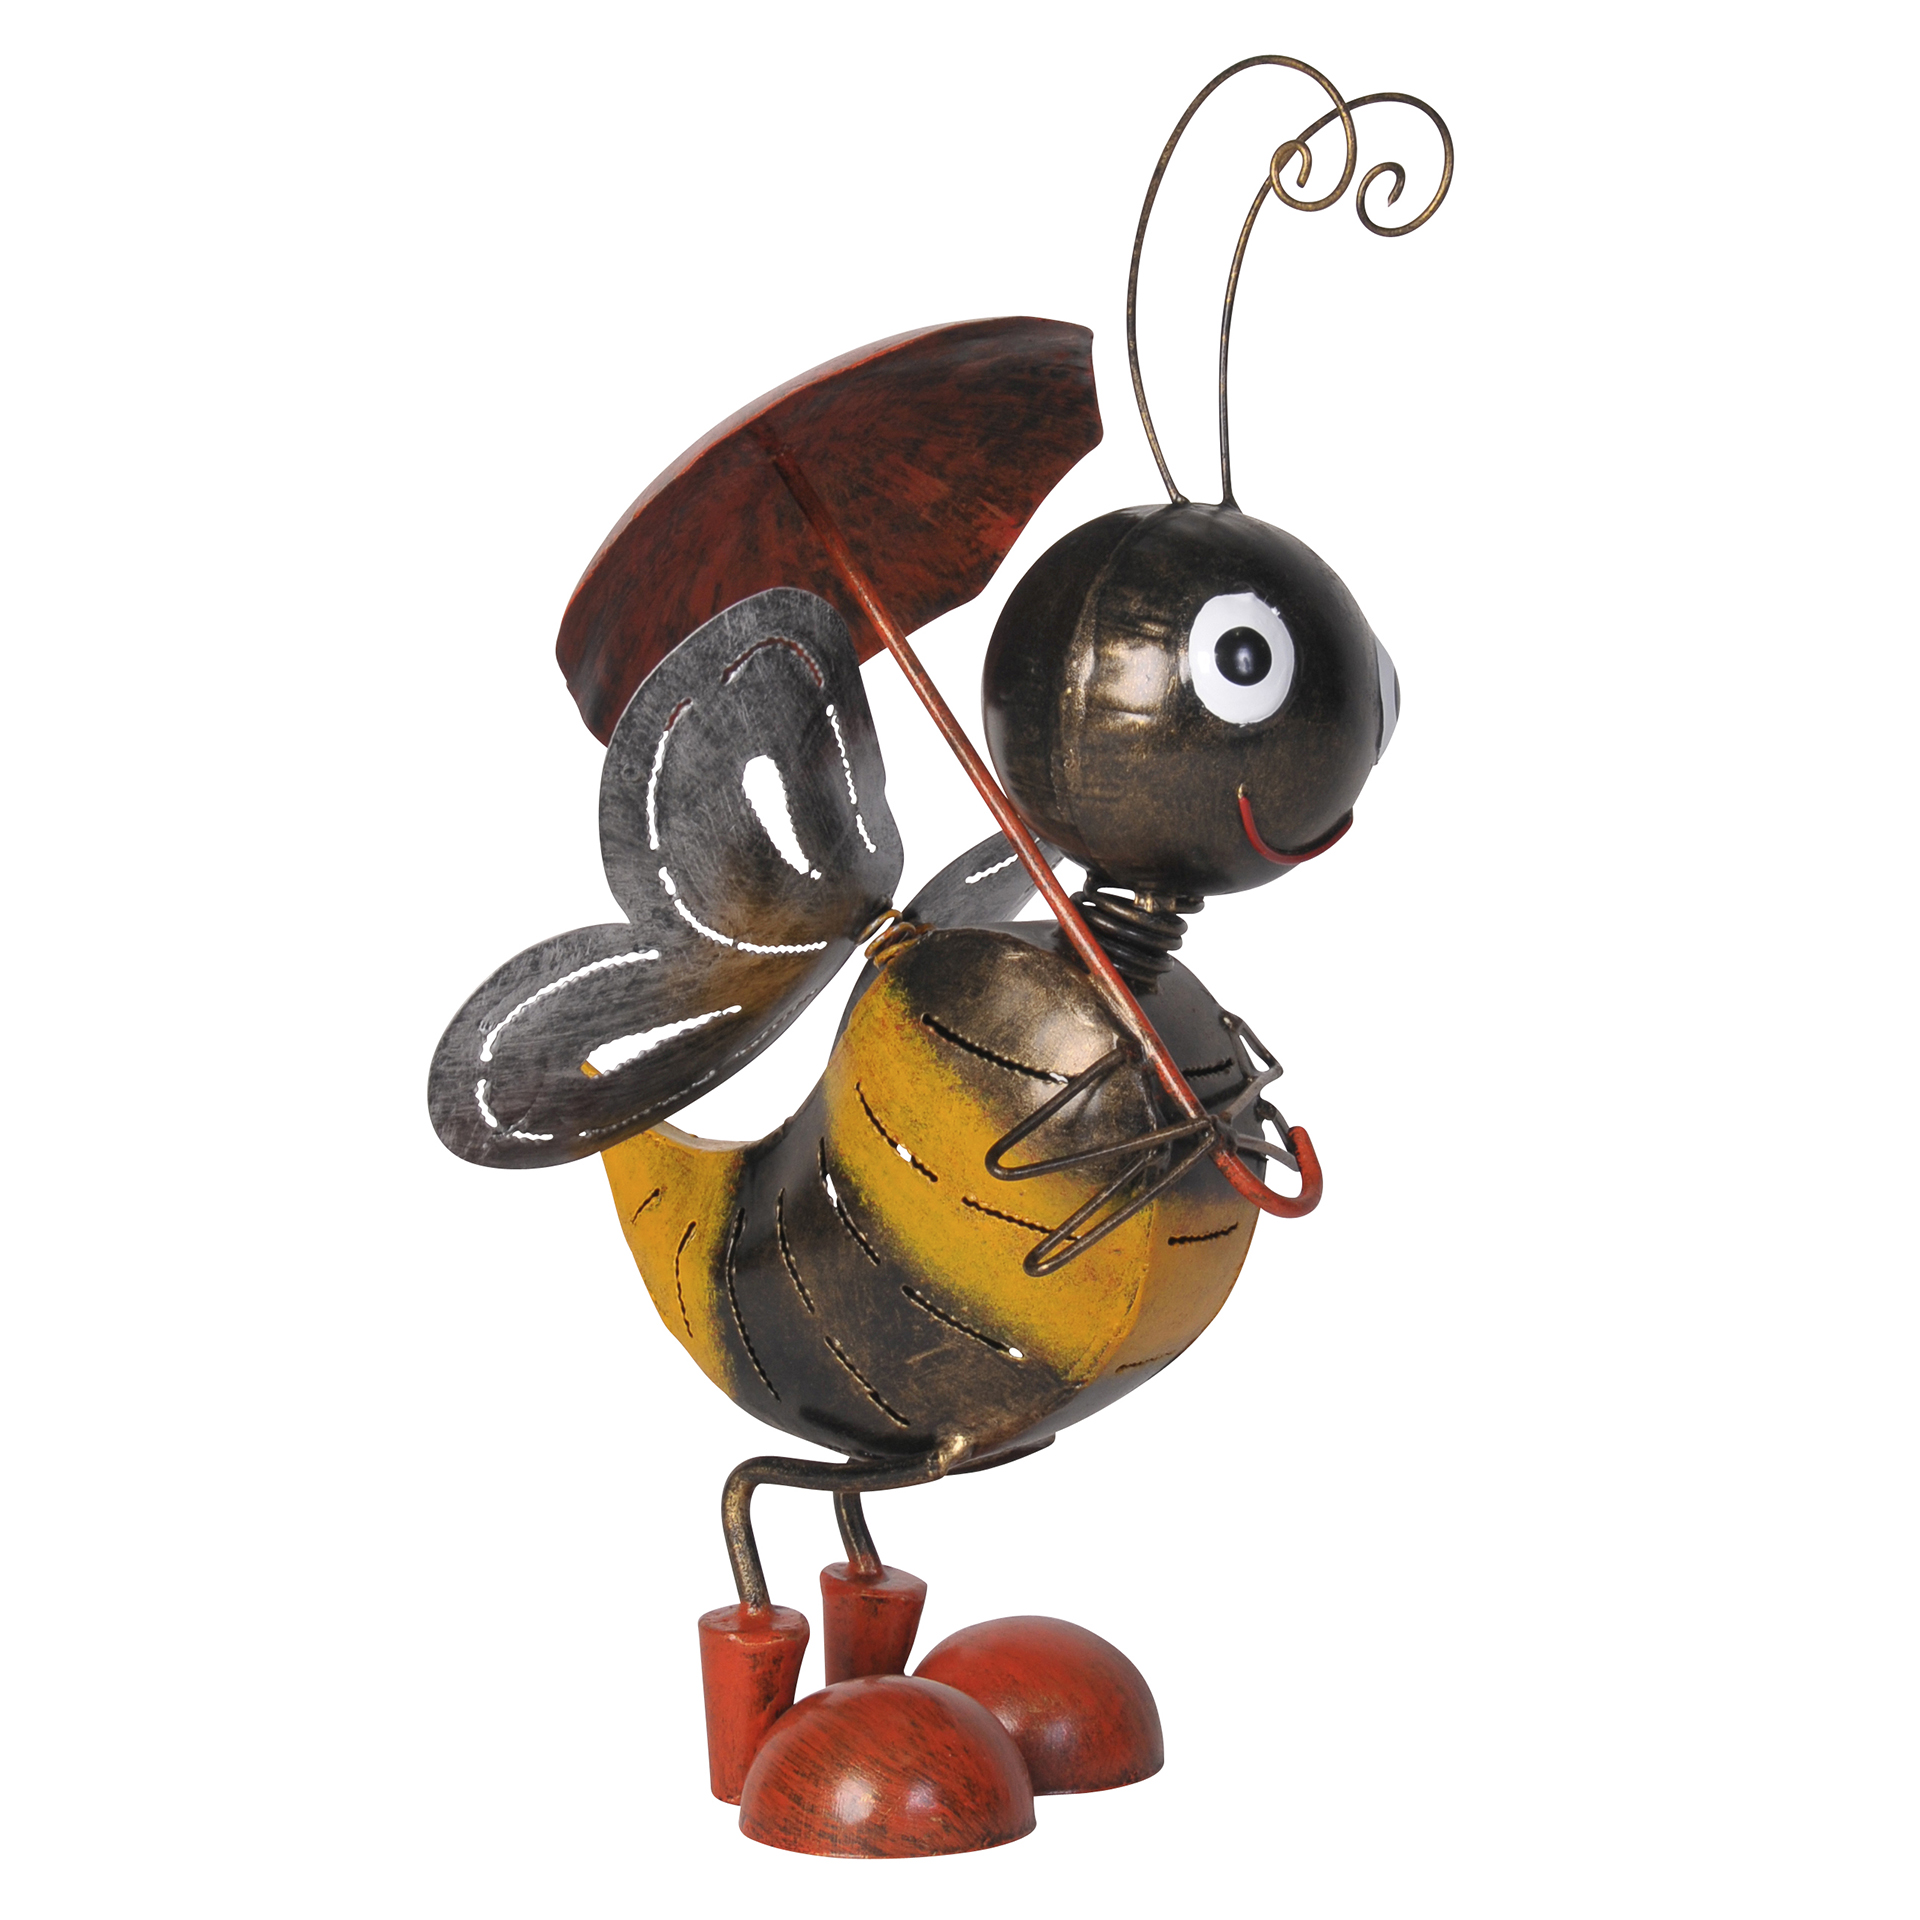 Biene mit Regenschirm Metallfigur Gartendekoration handgefertigt Unikat